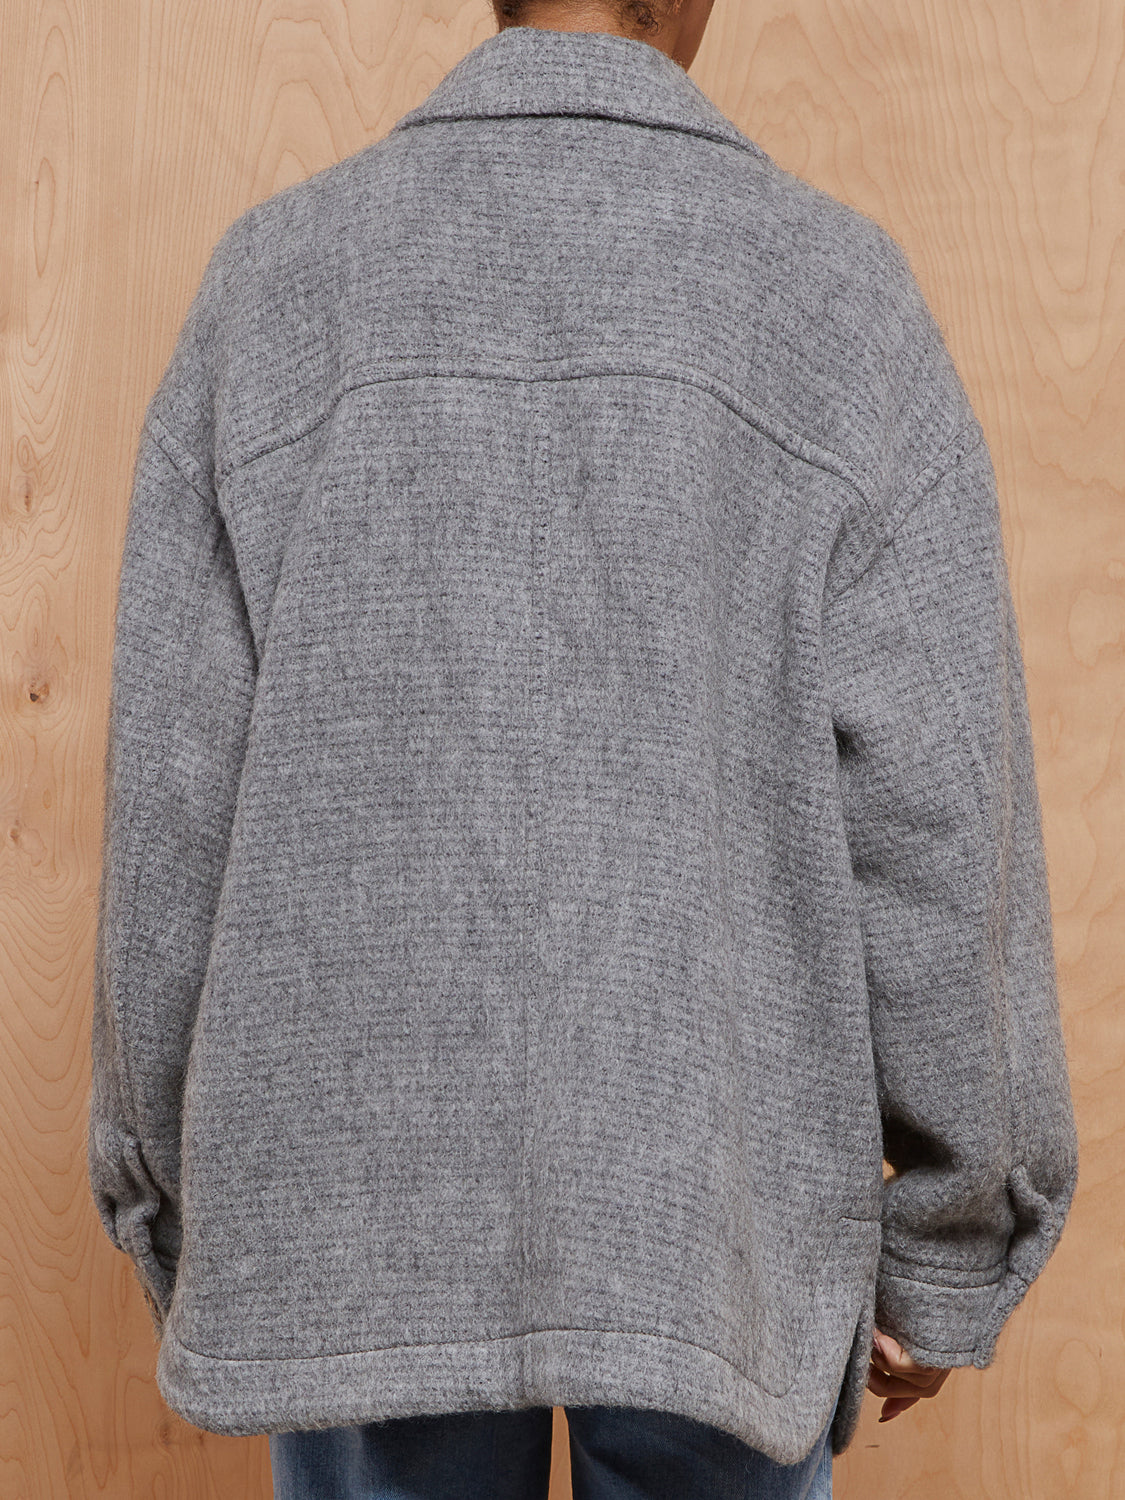 Madewell Grey Wool Chore Coat